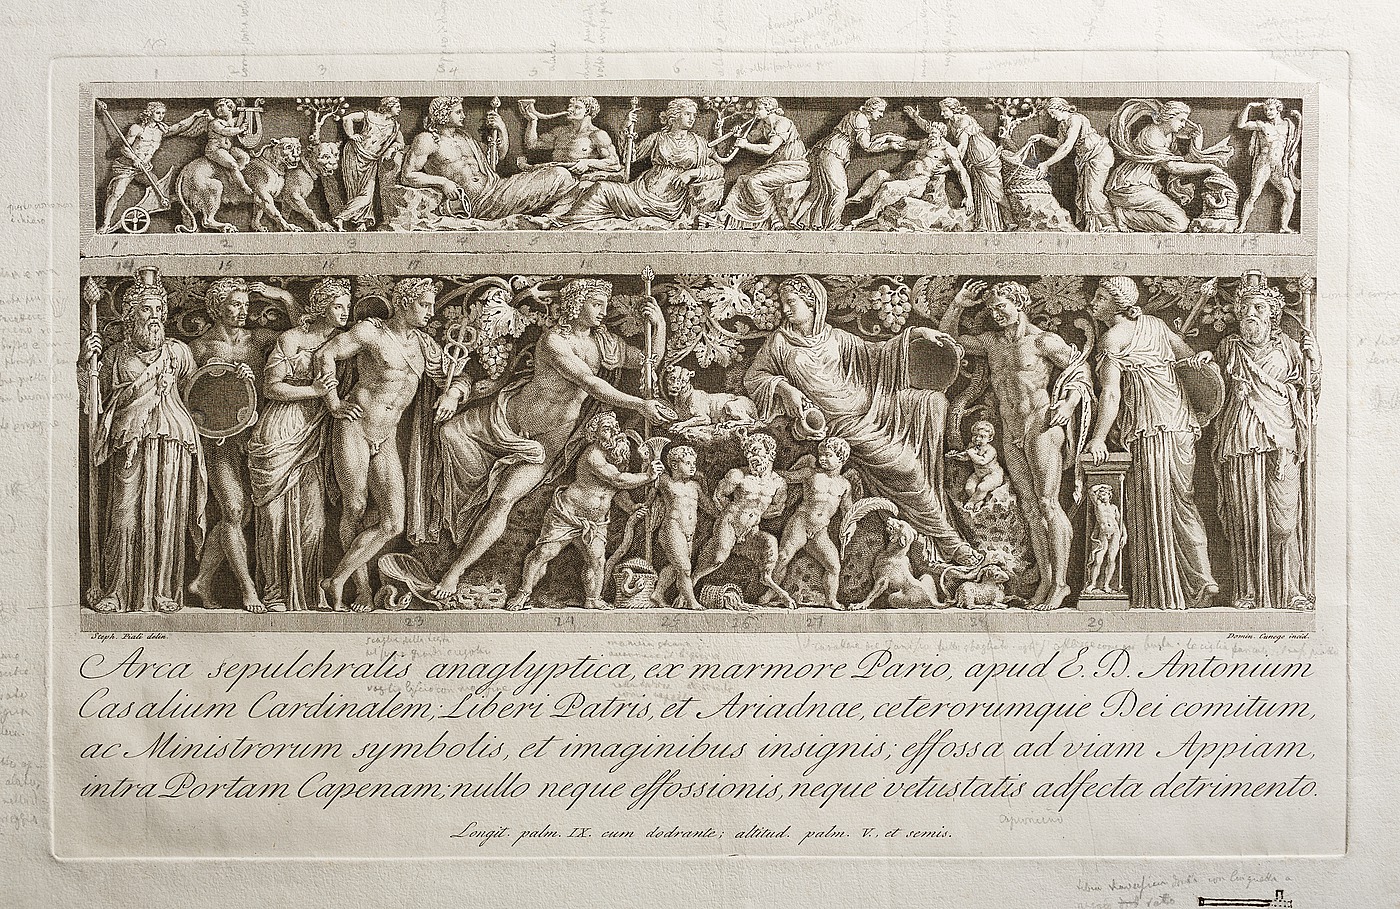 Casali-sarkofagen med Dionysos og Ariadne